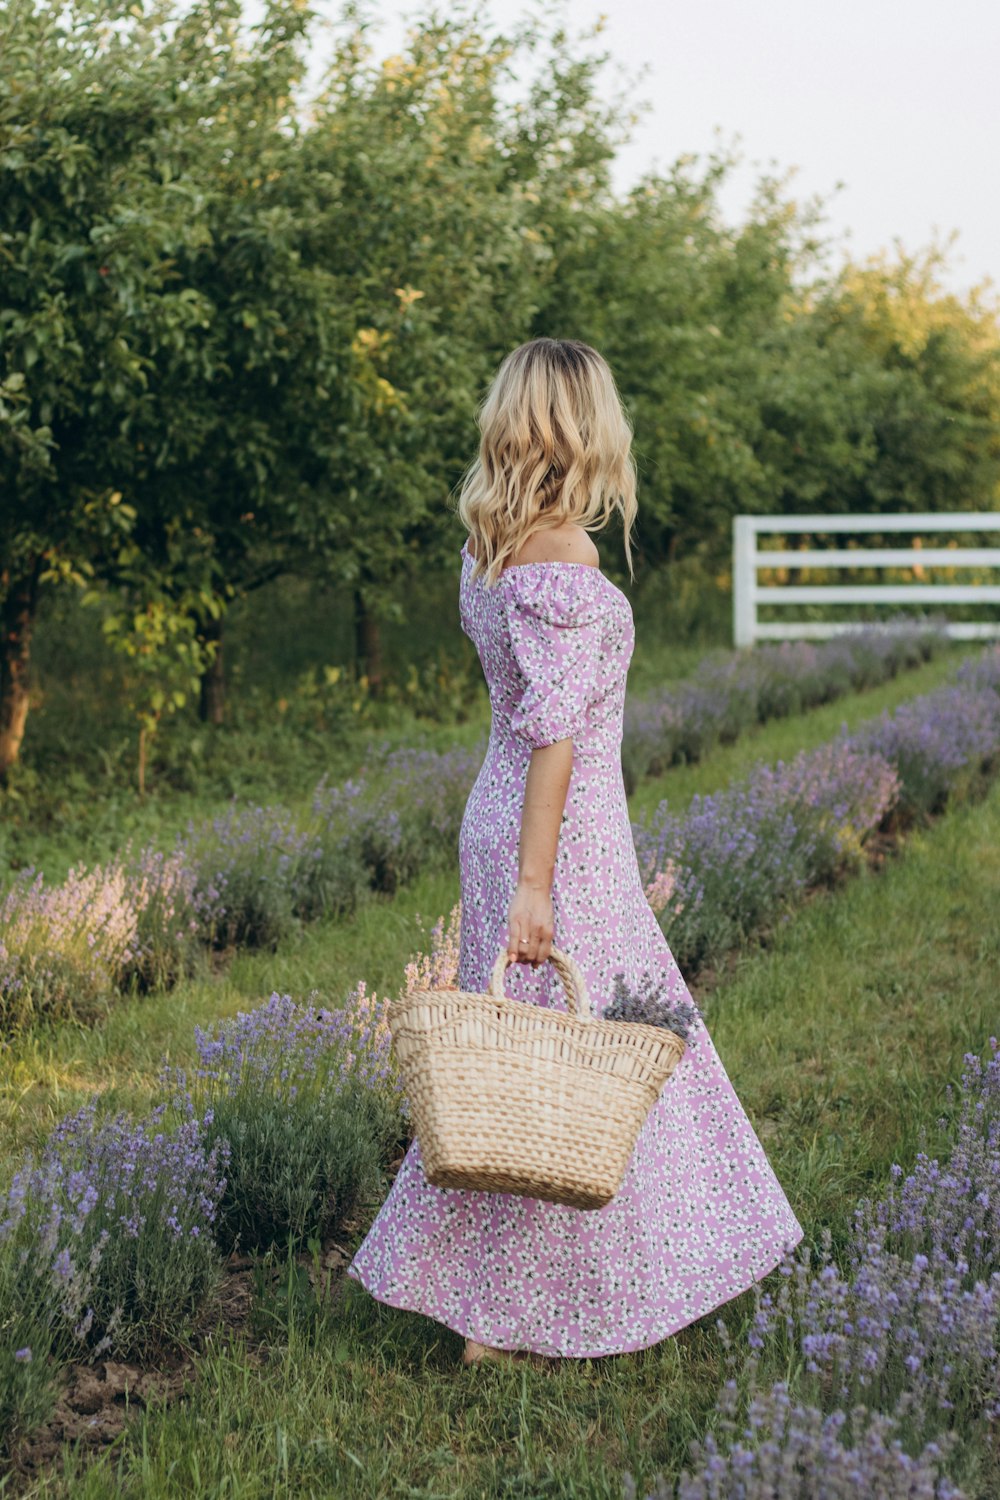 a girl in a dress holding a basket in a field of purple flowers